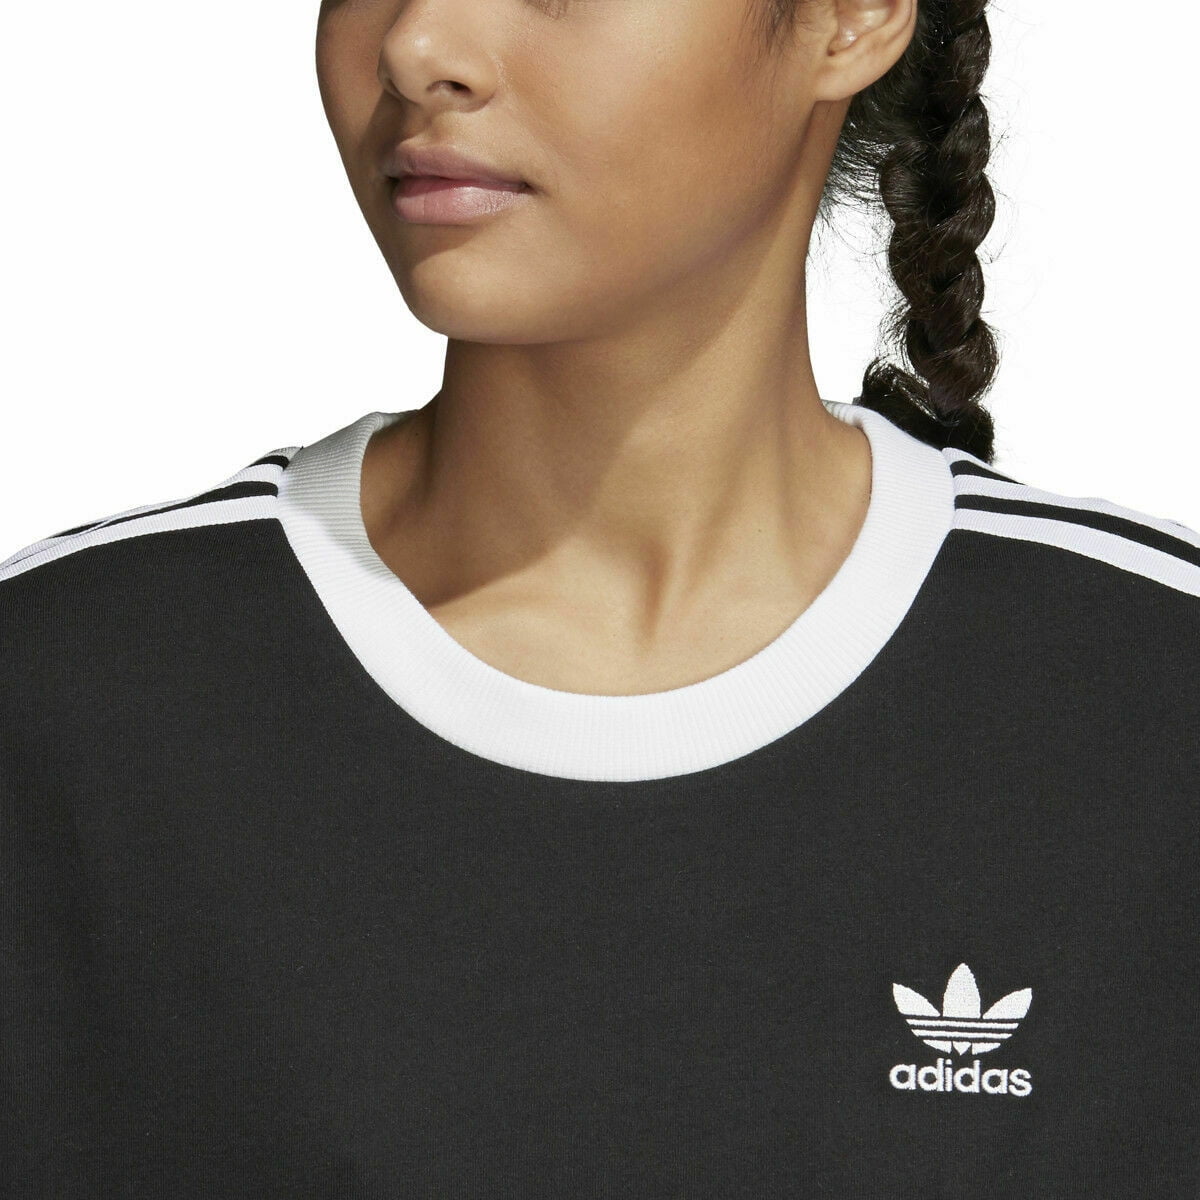 Adidas Originals Women's 3-Stripes Tee CY4751 -